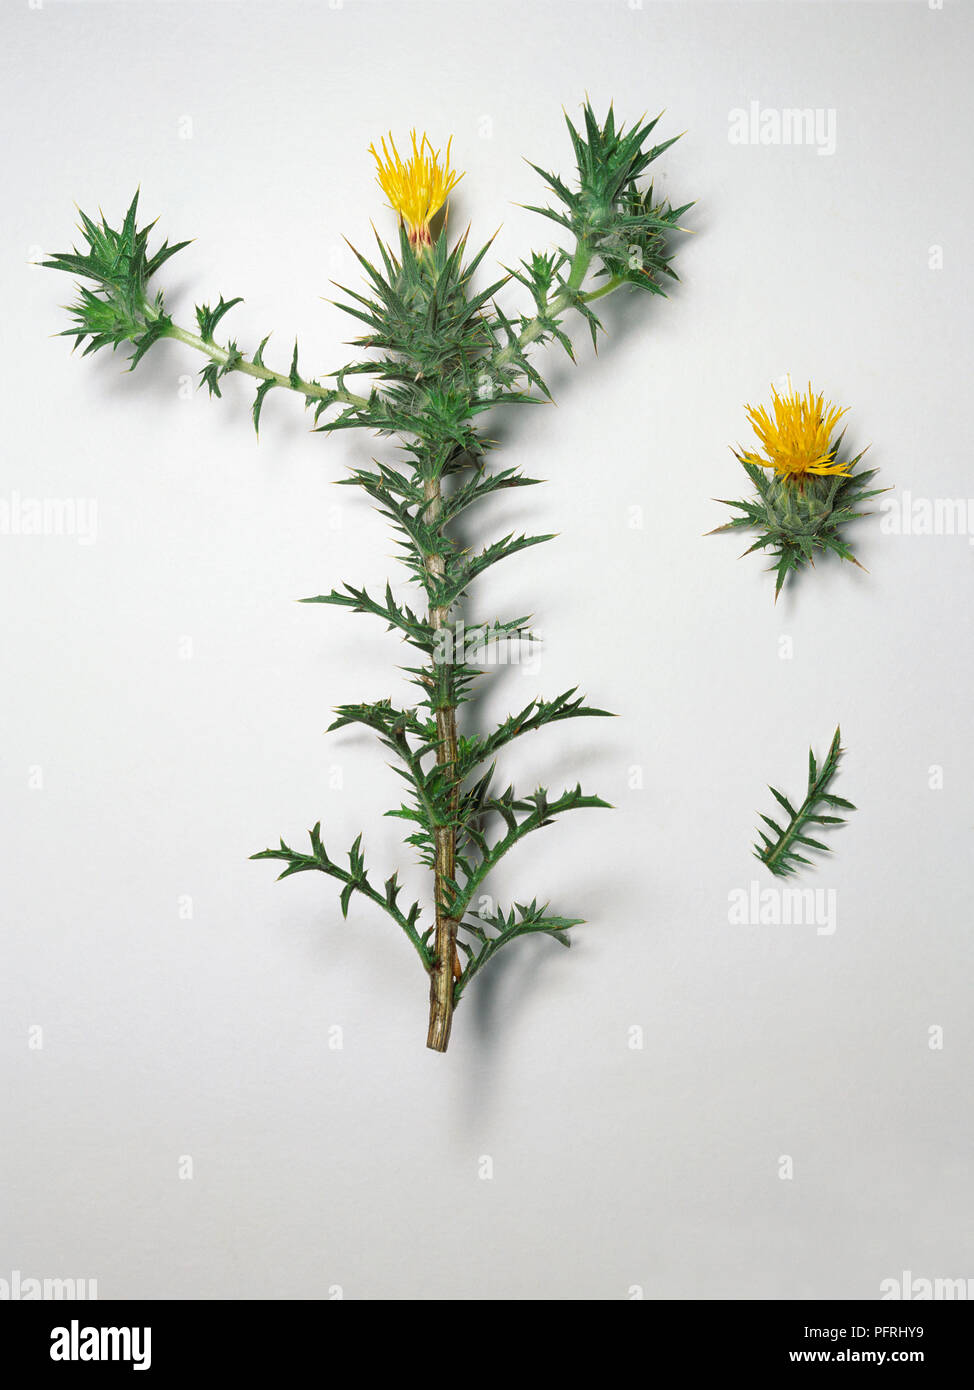 Carthamus lanatus, thistle-like plant with yellow flowers Stock Photo